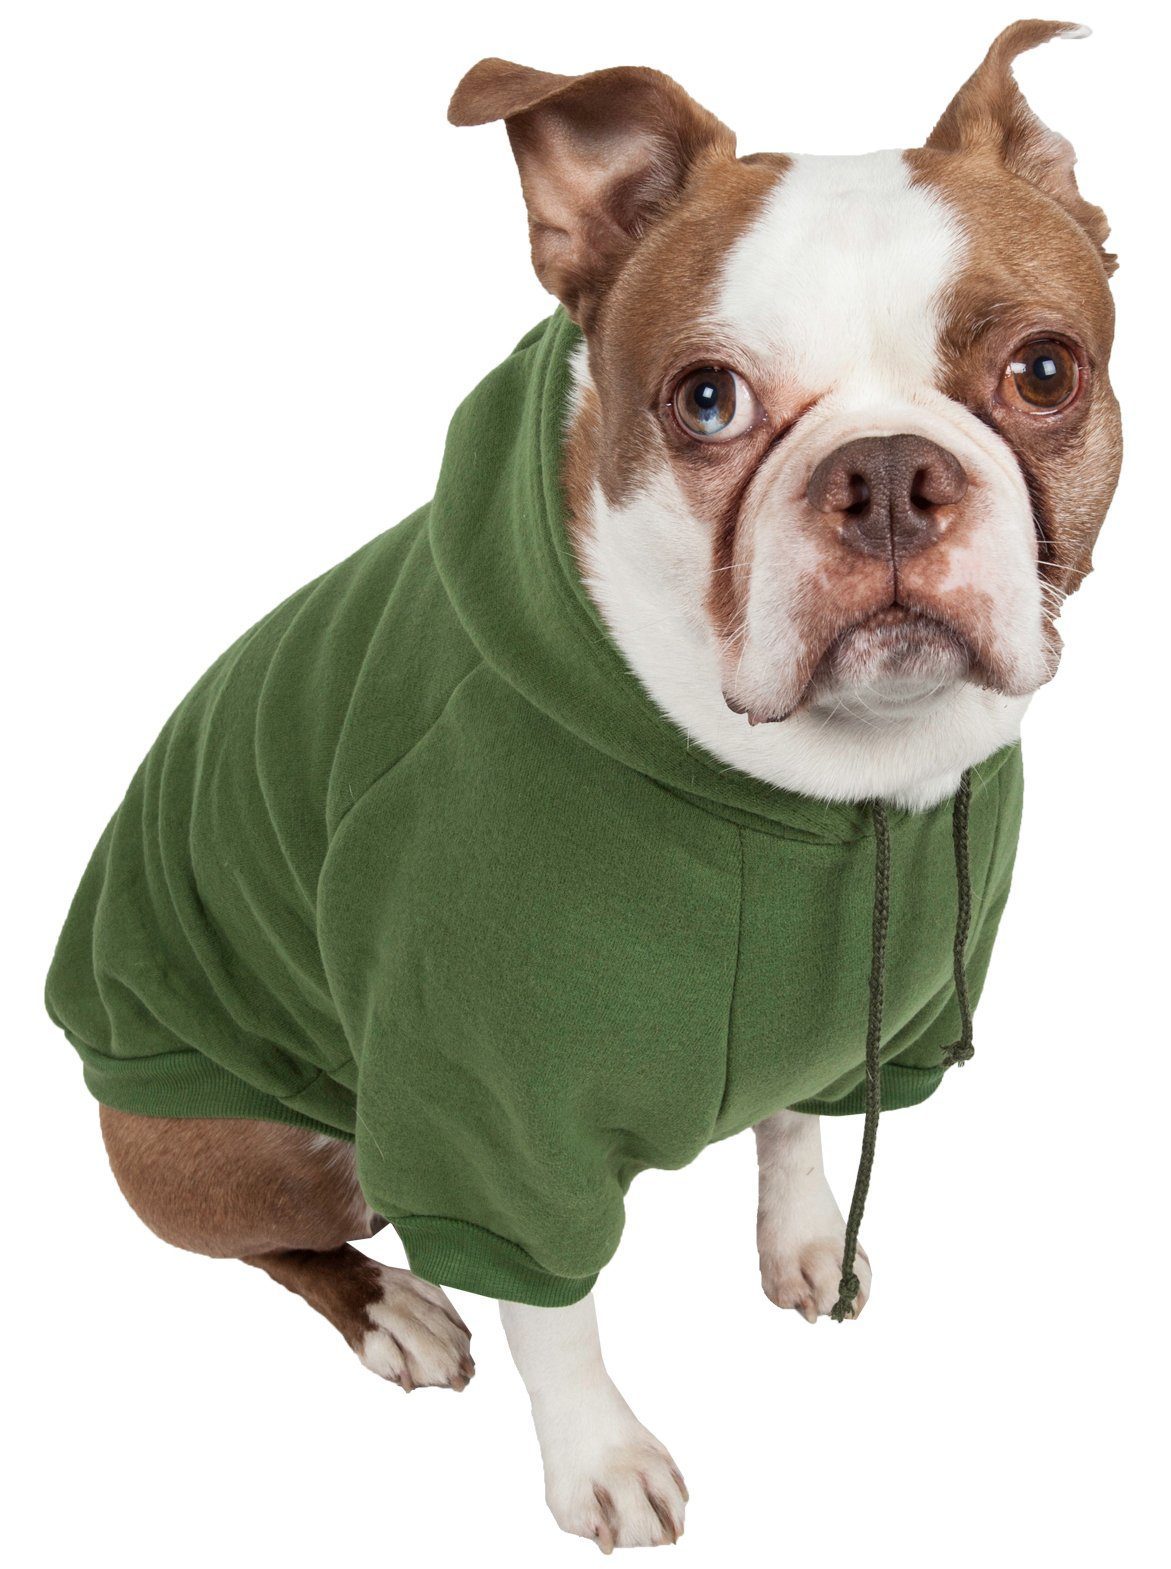 Pet Life ® 'American Classic' Fashion Plush Cotton Hooded Dog Sweater X-Small Green